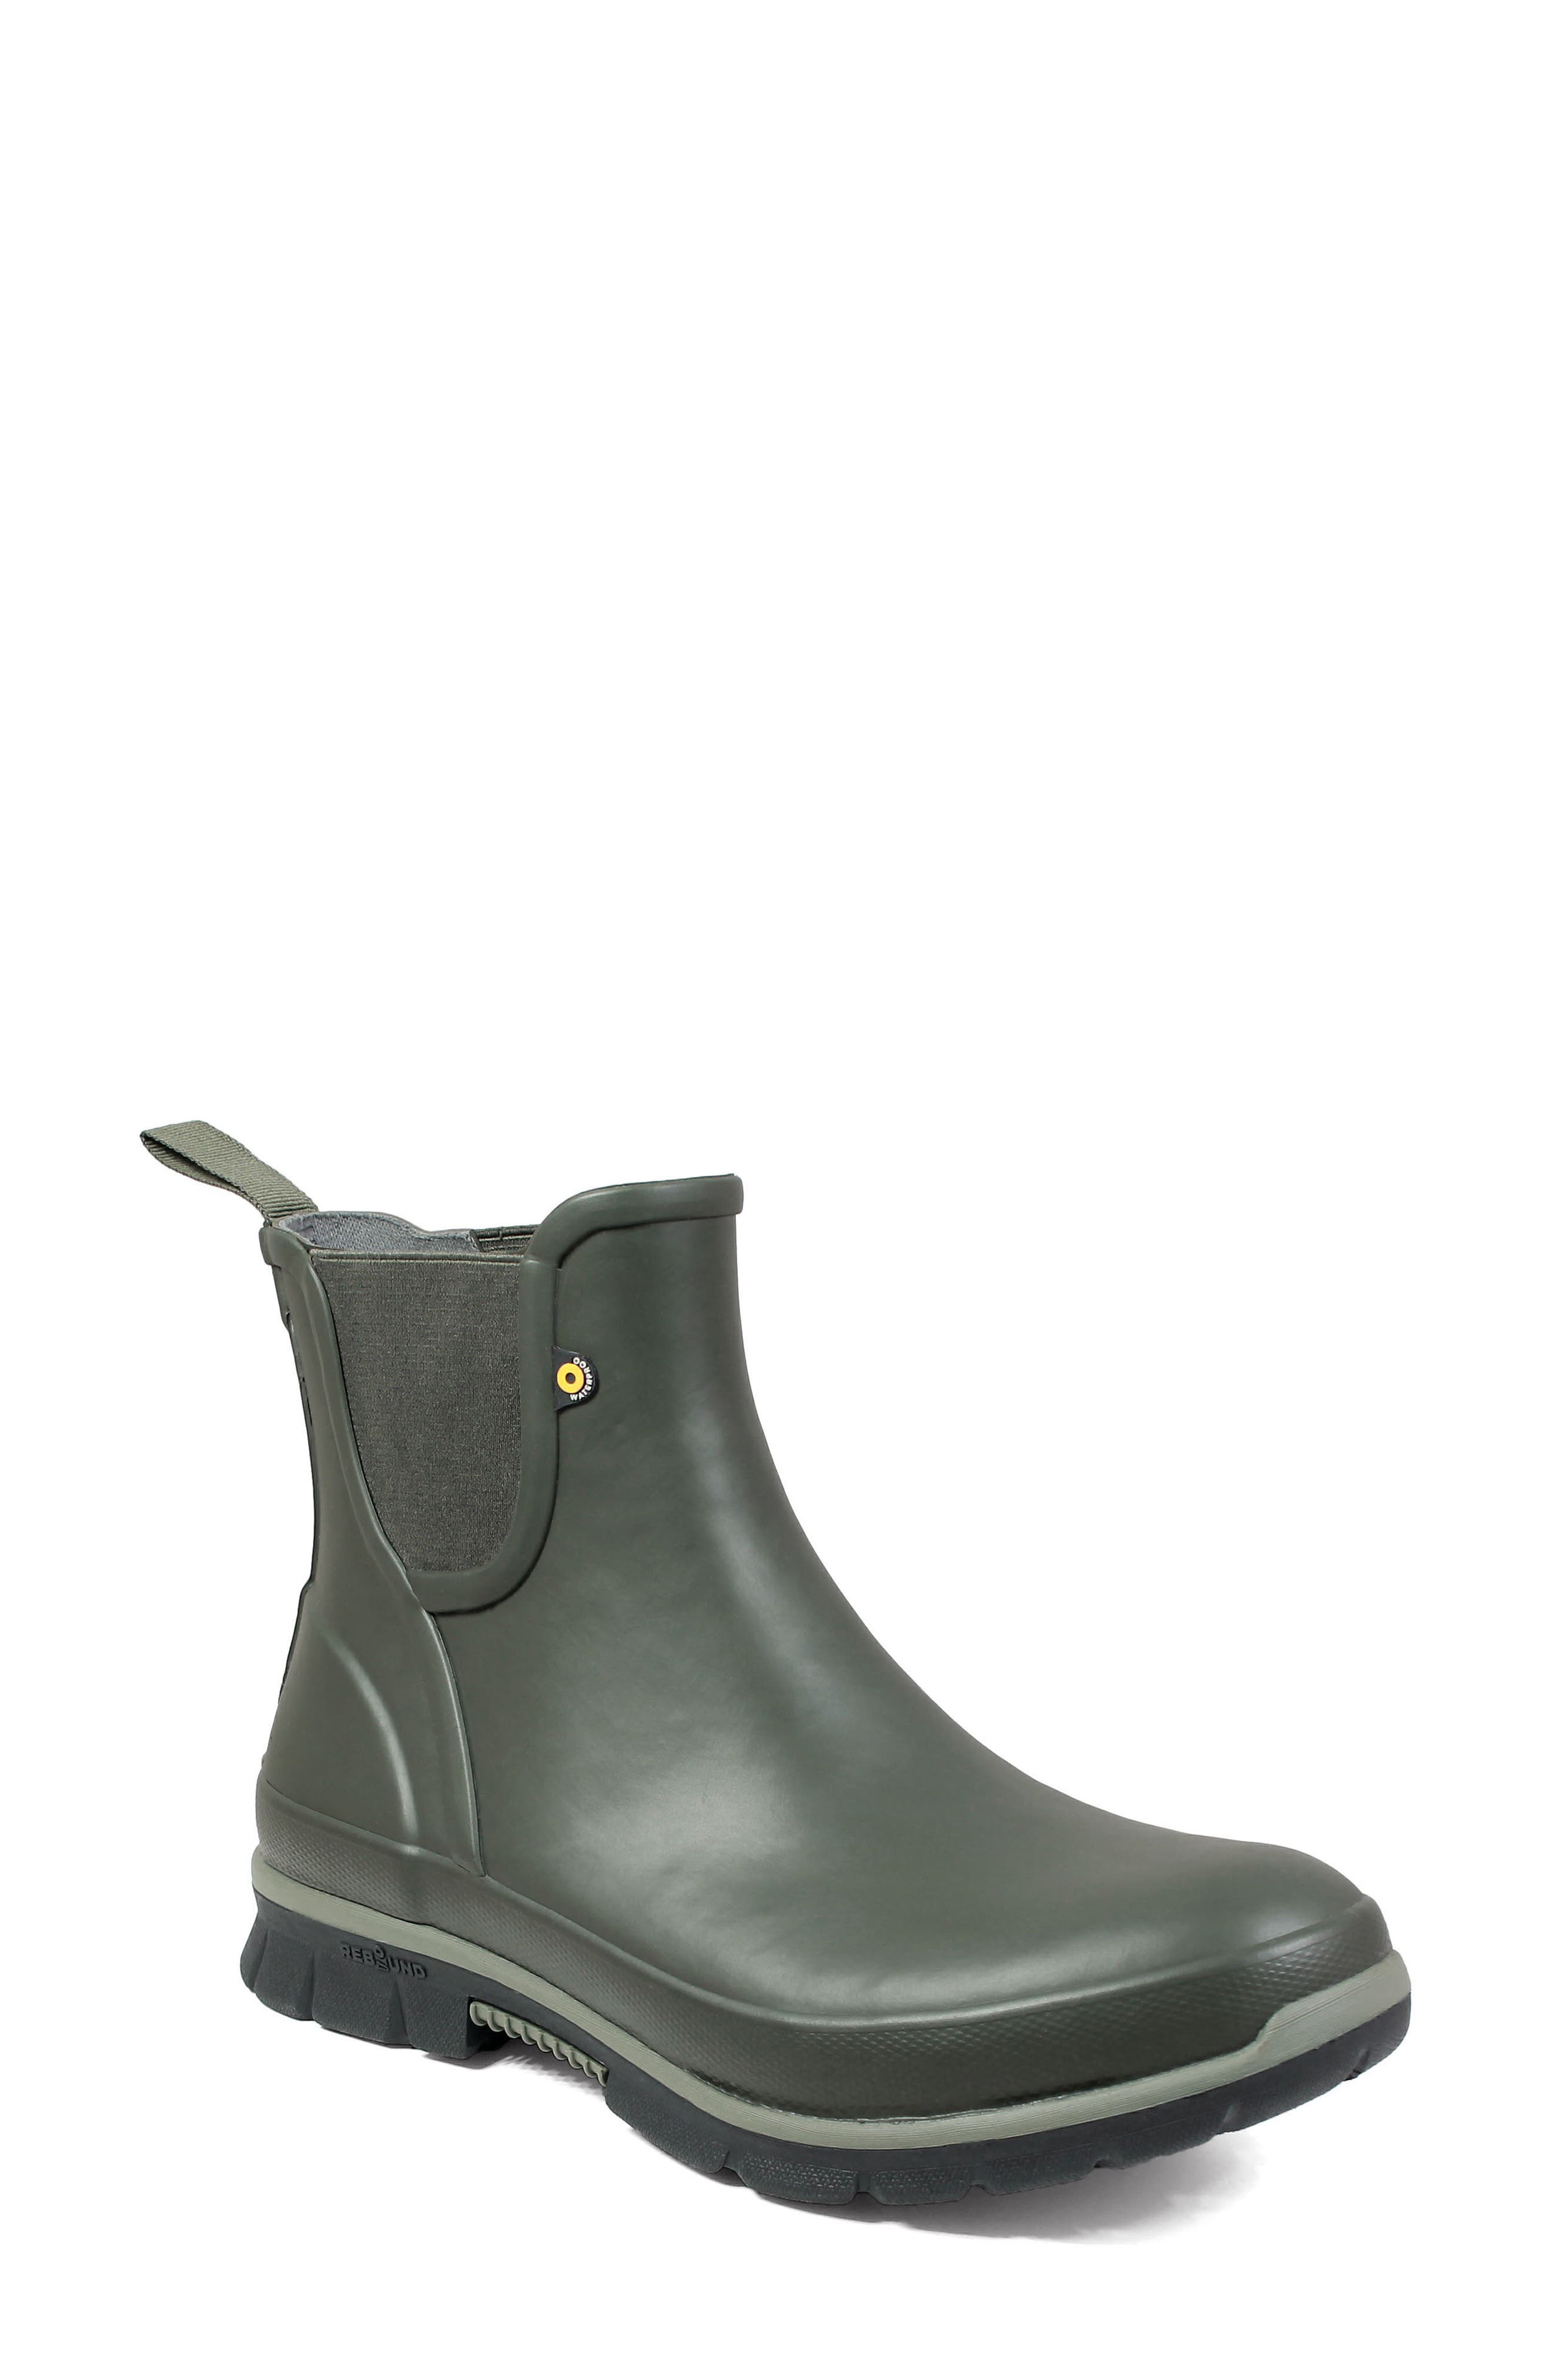 bogs amanda slip on rain boots